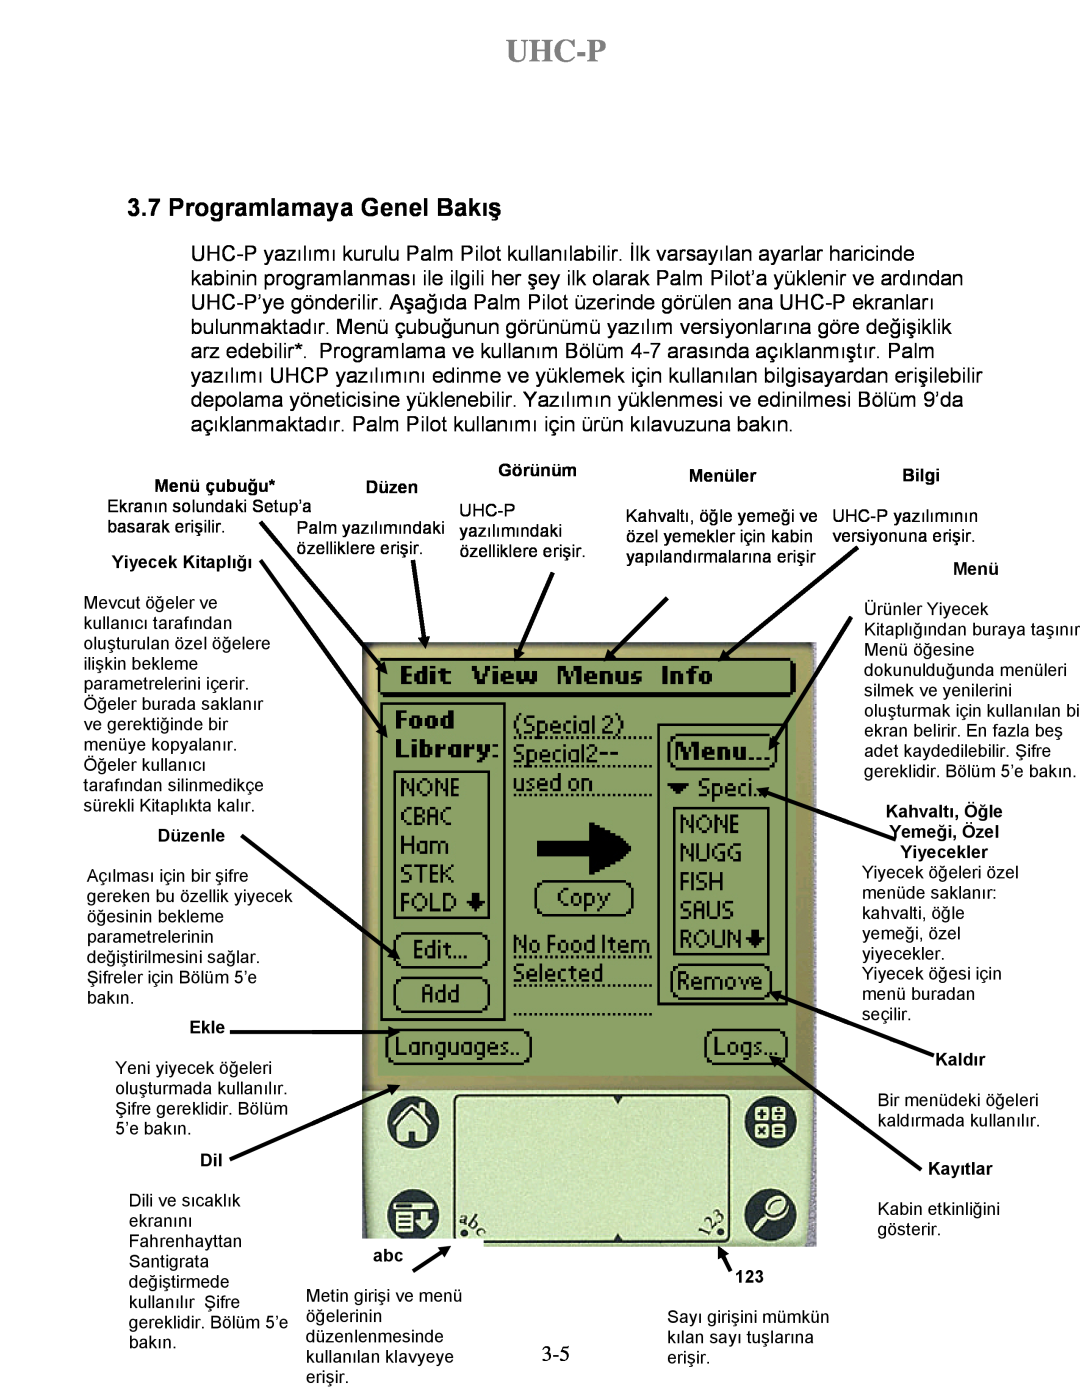 Frymaster UHC-P 2-yuva, UHC-P 4-yuva manual Uhc-P, Programlamaya Genel Bakış 